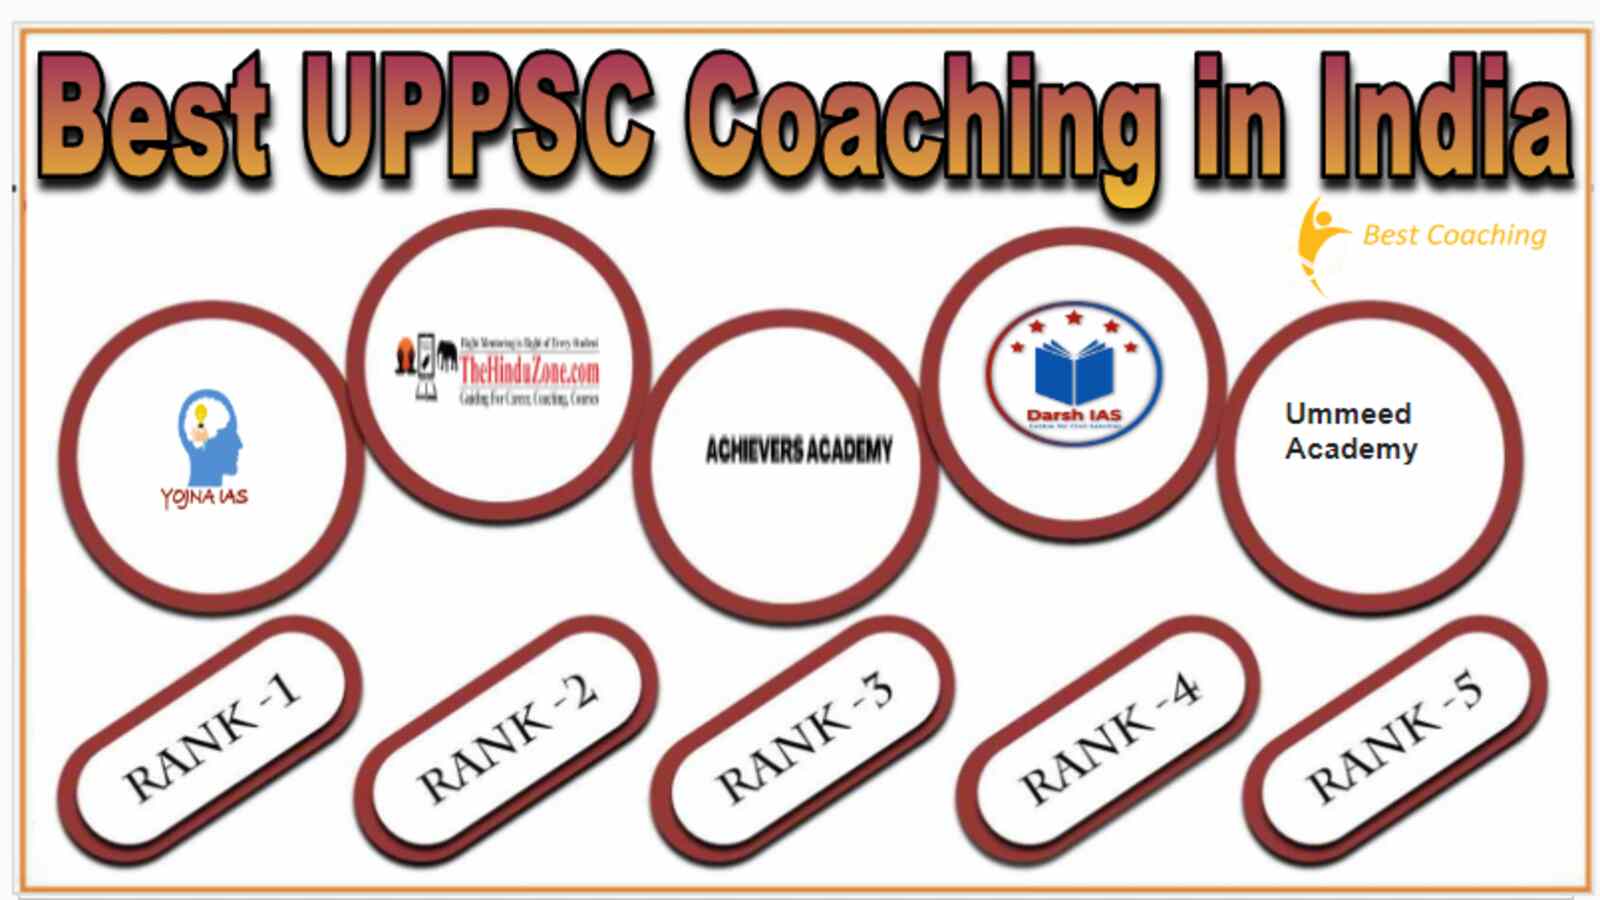 Best UPPSC Coaching in India